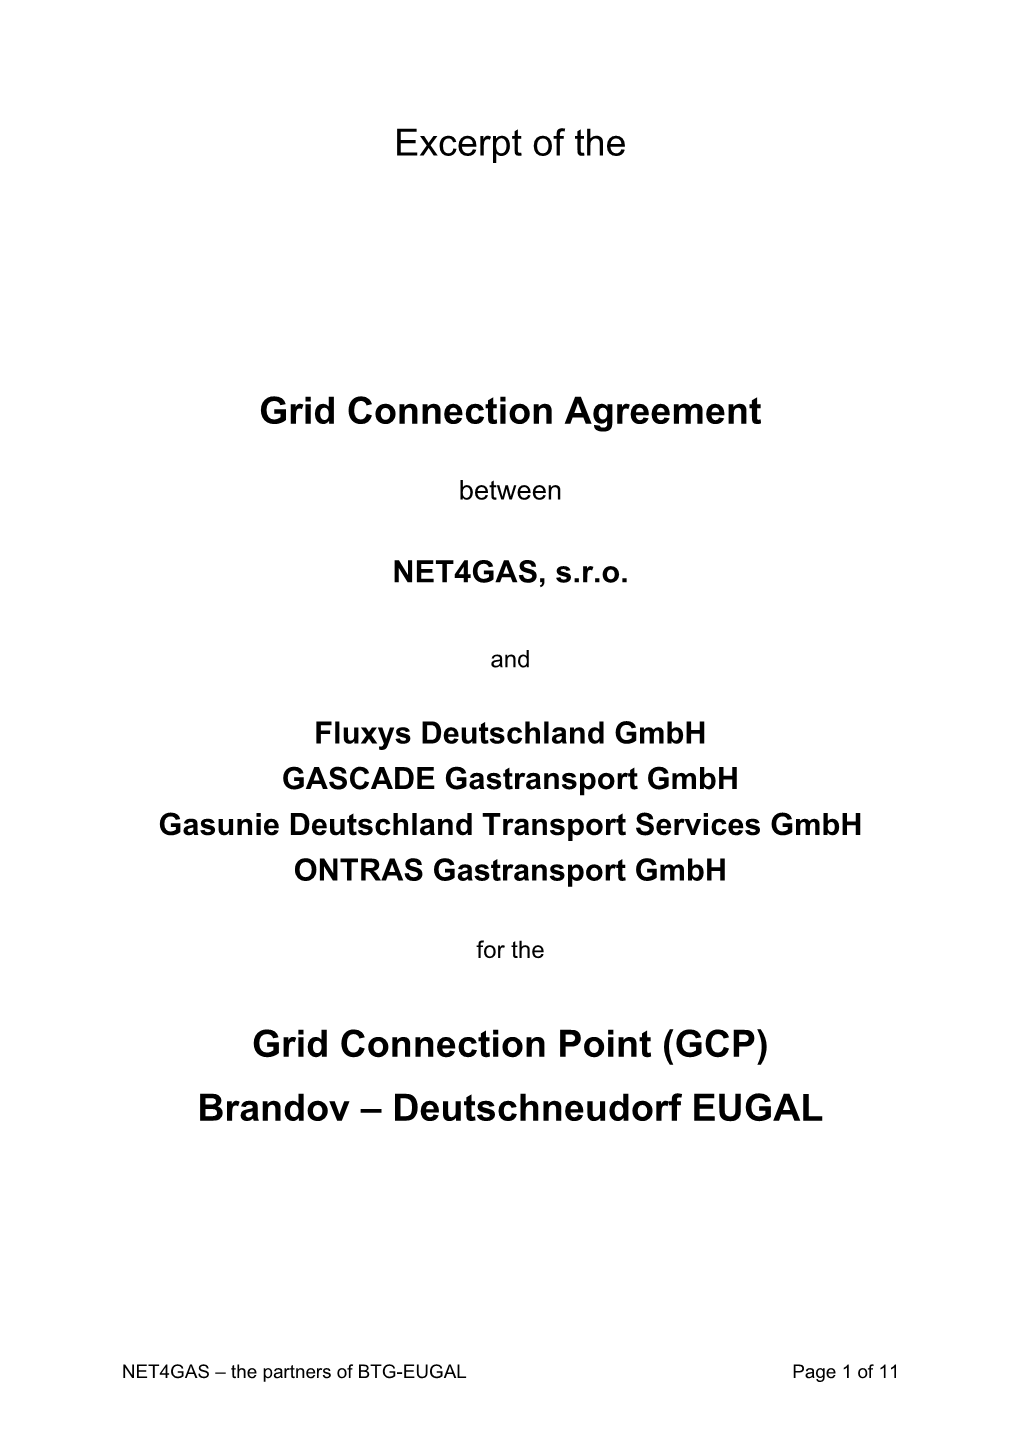 GCA Deutschneudorf-EUGAL